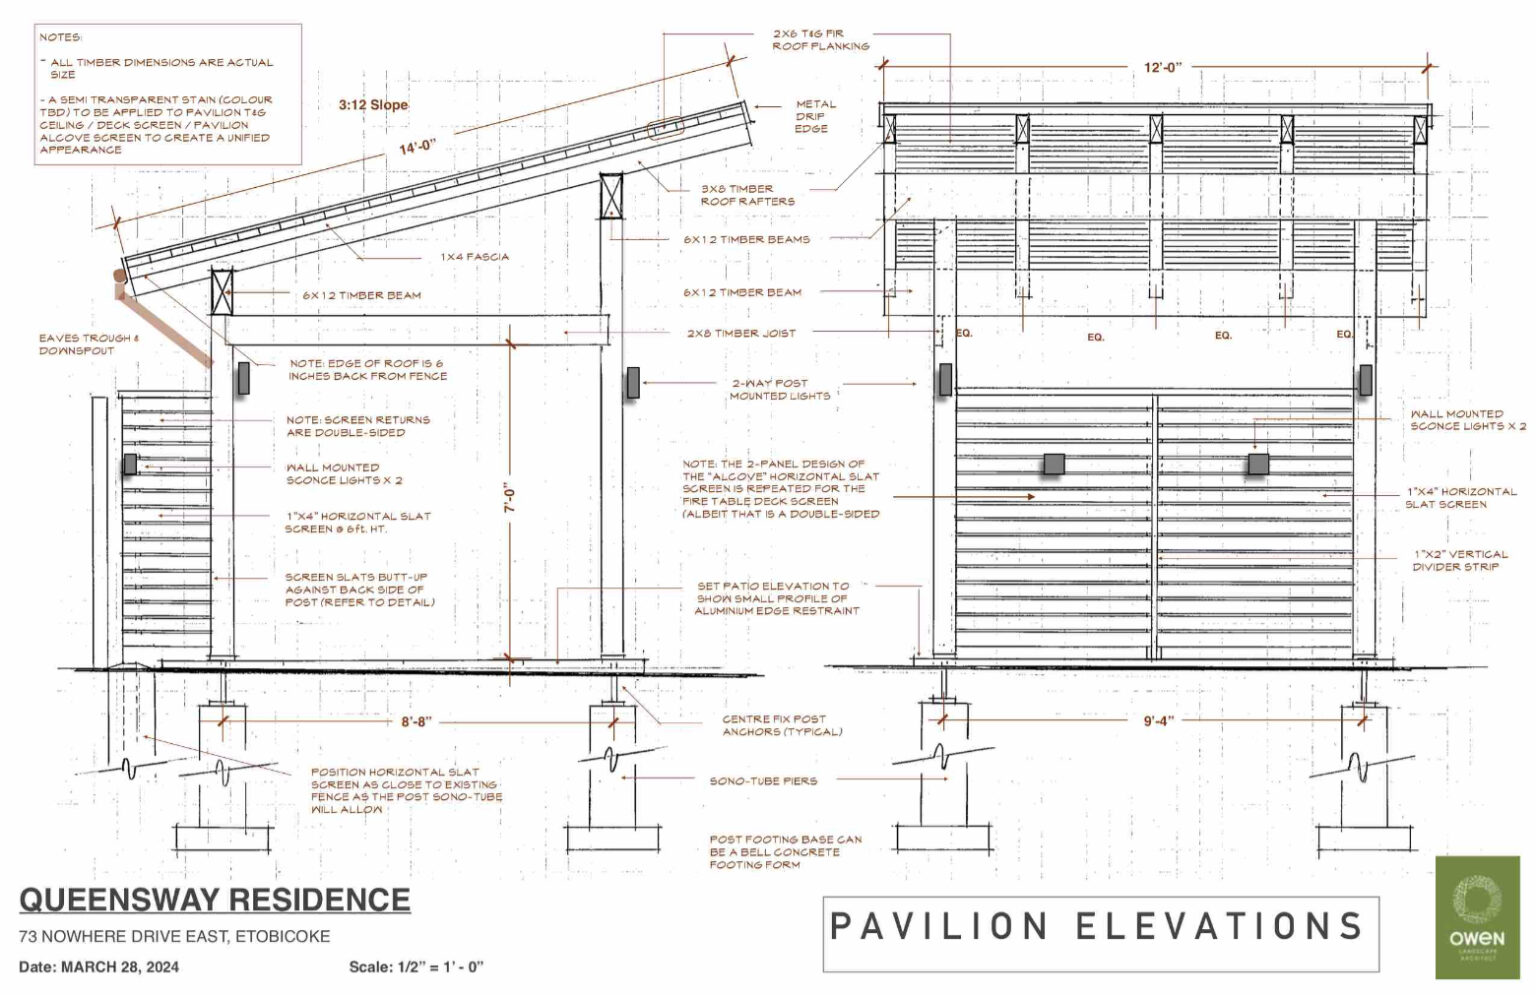 Construction Detail for the Pavilion